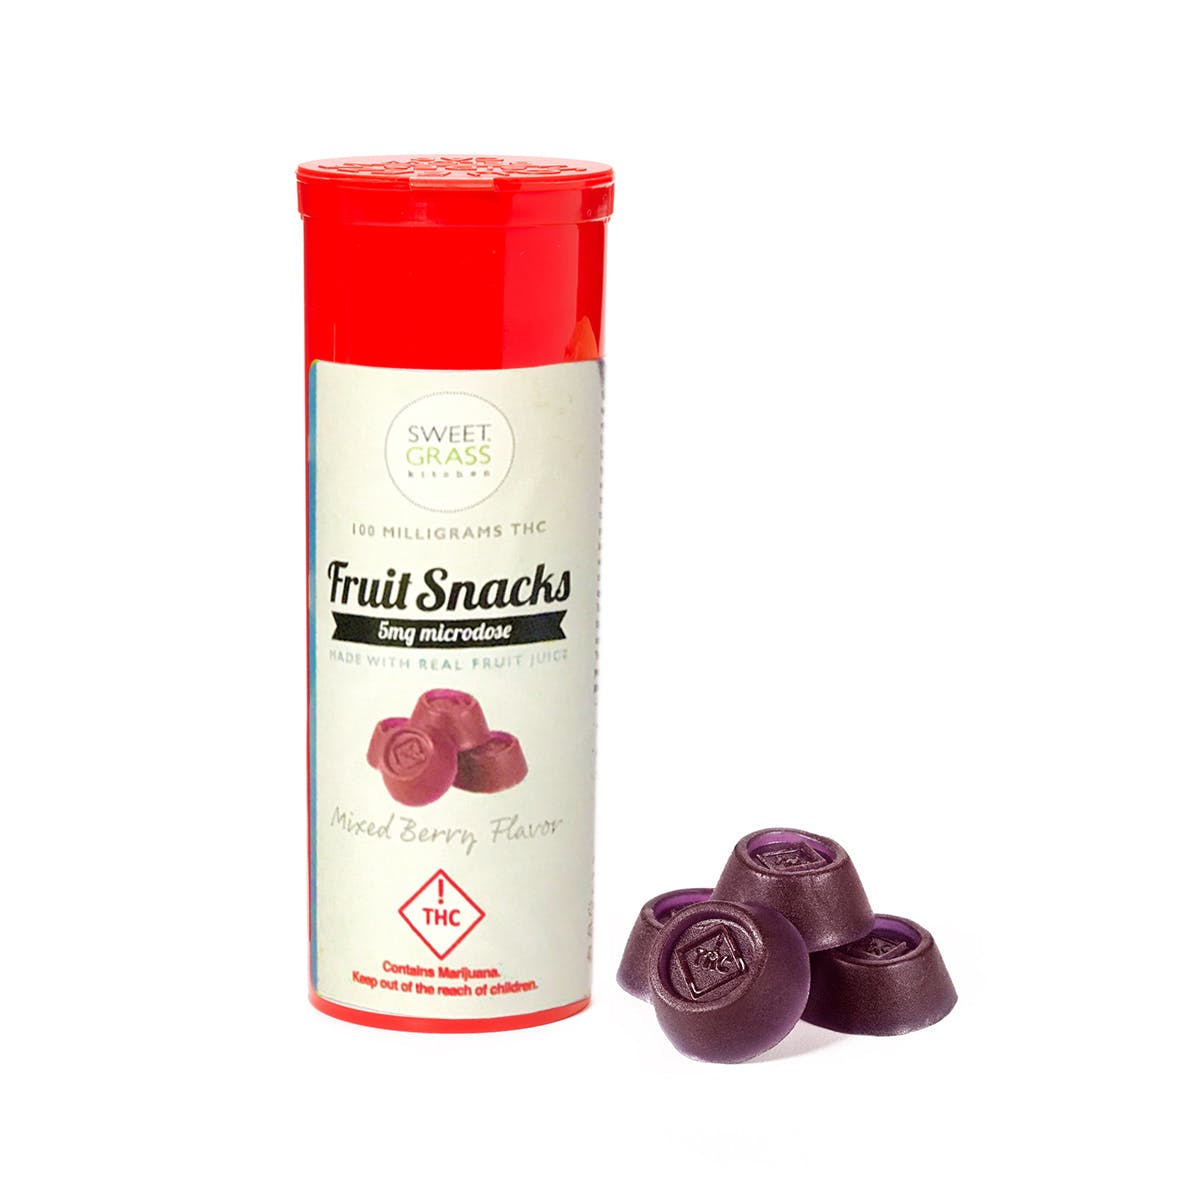 Mixed Berry Fruit Snacks